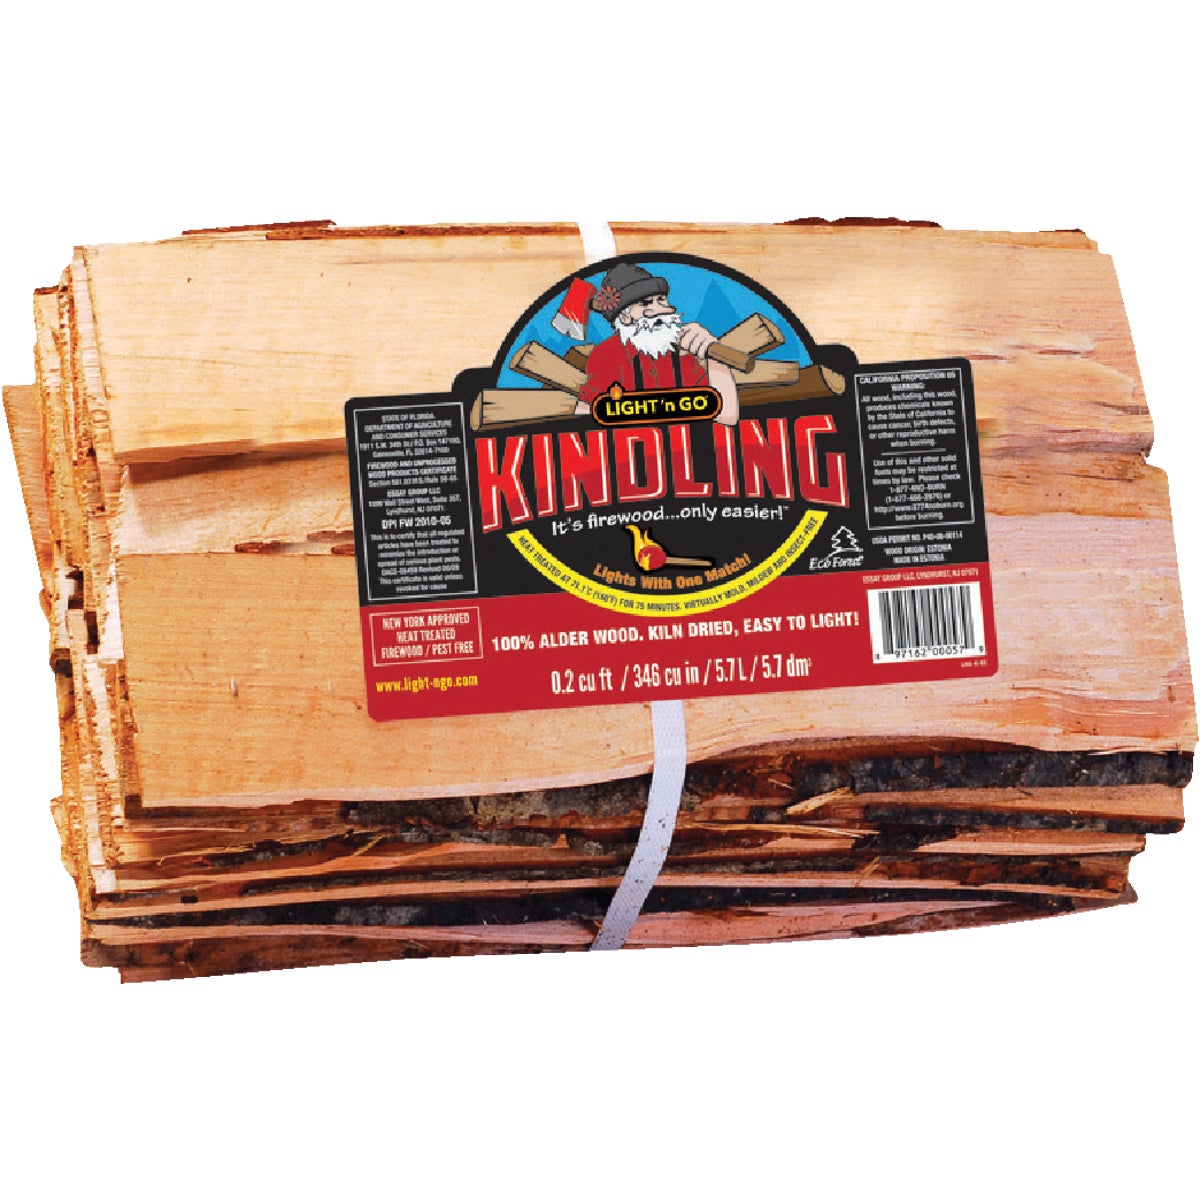 Item 404566, Light'n Go Kindling is made of 100% Alder wood, sliced into thin sheets, 